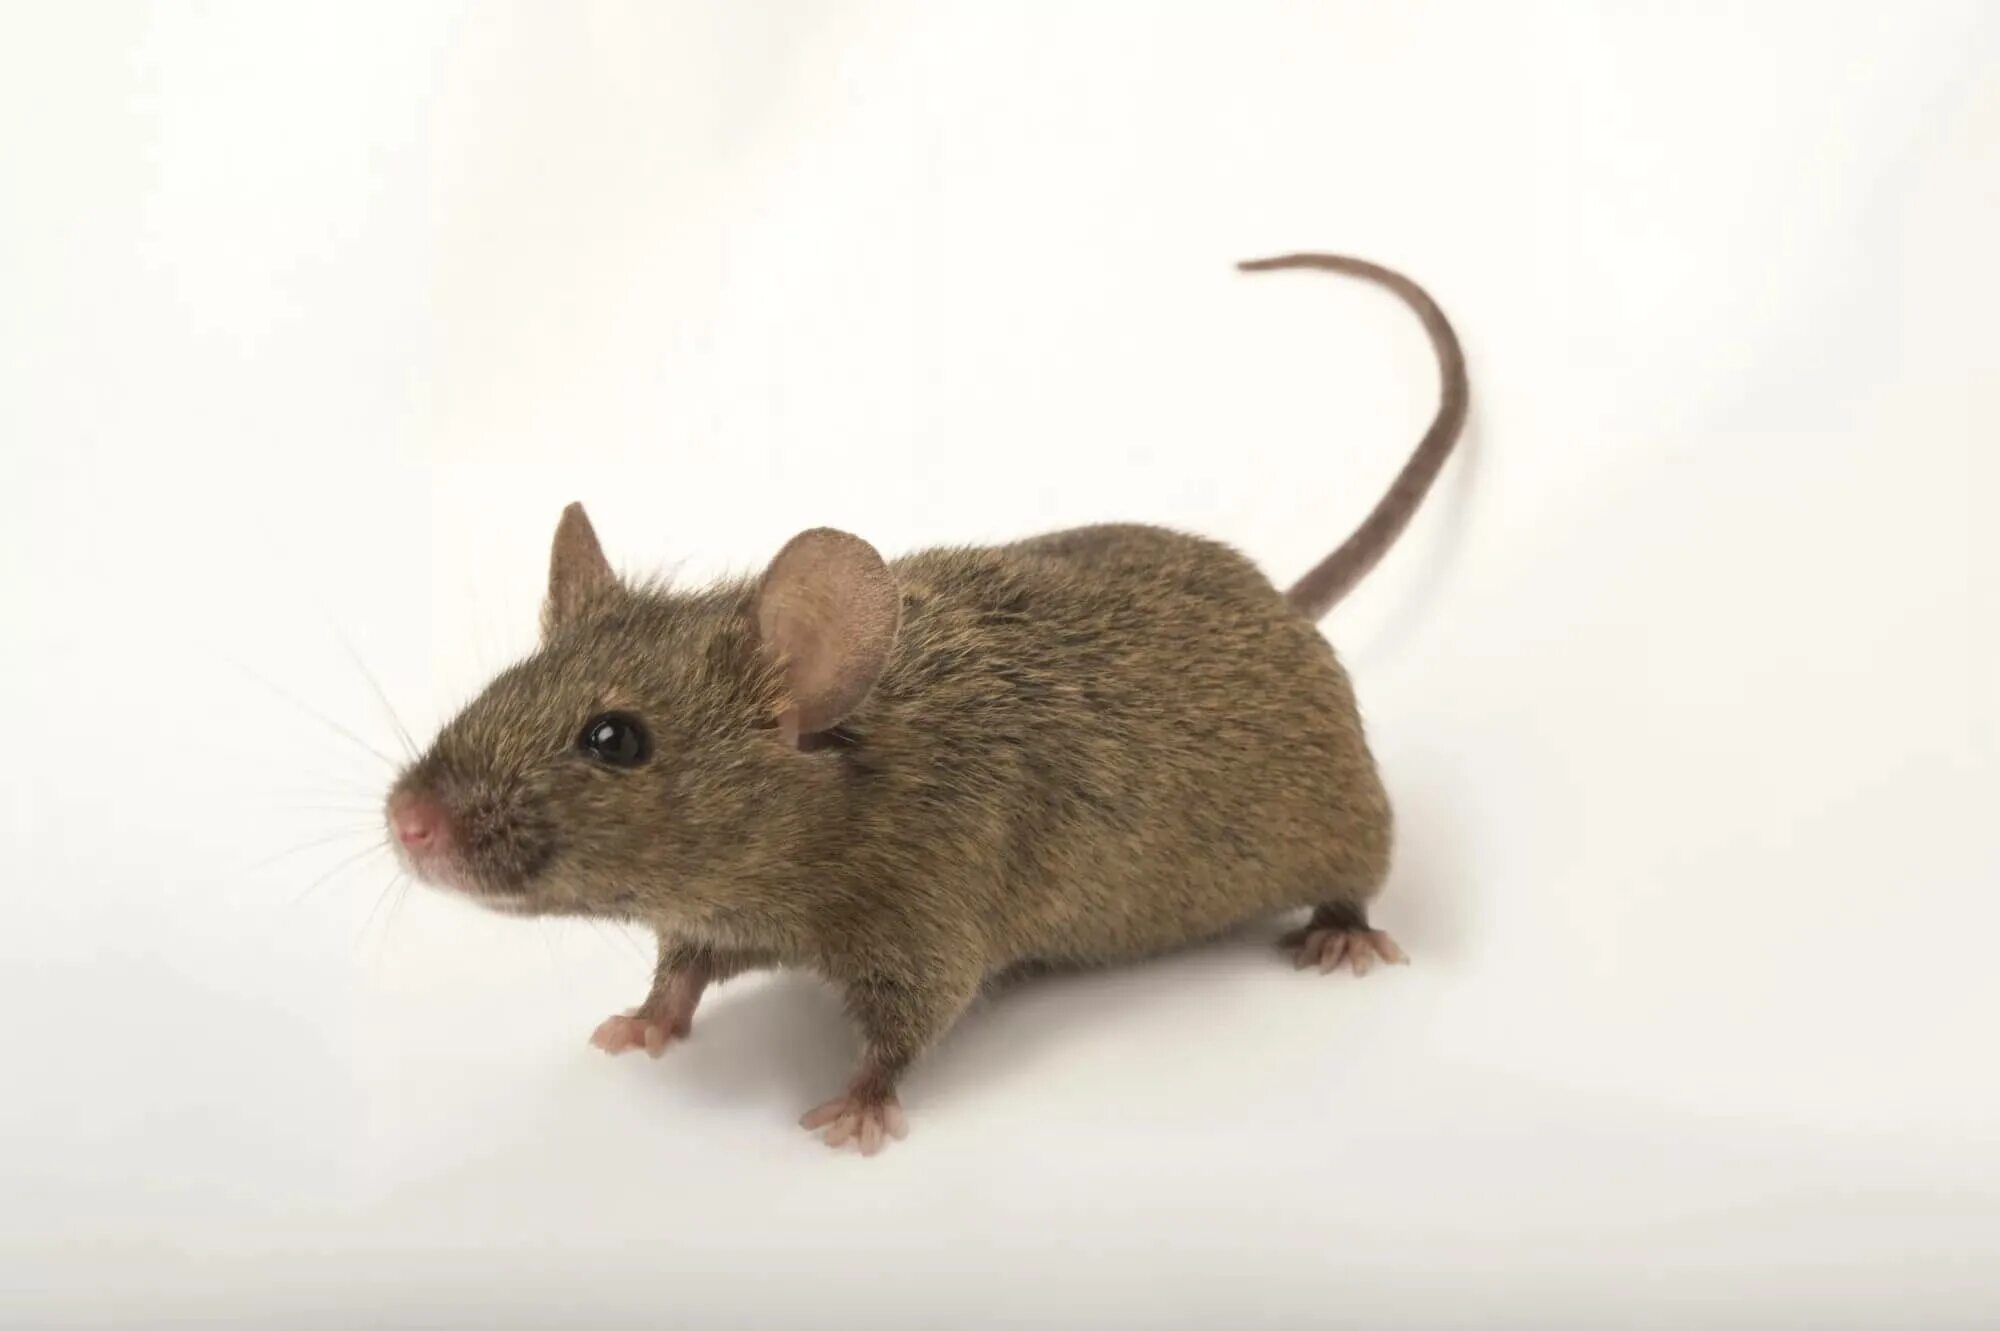 Mus musculus домовая мышь. Мышь домовая (mus musculus l.. Акомис иглистая мышь. Восточноазиатская мышь Apodemus peninsulae Thomas, 1907. Sibm mouse